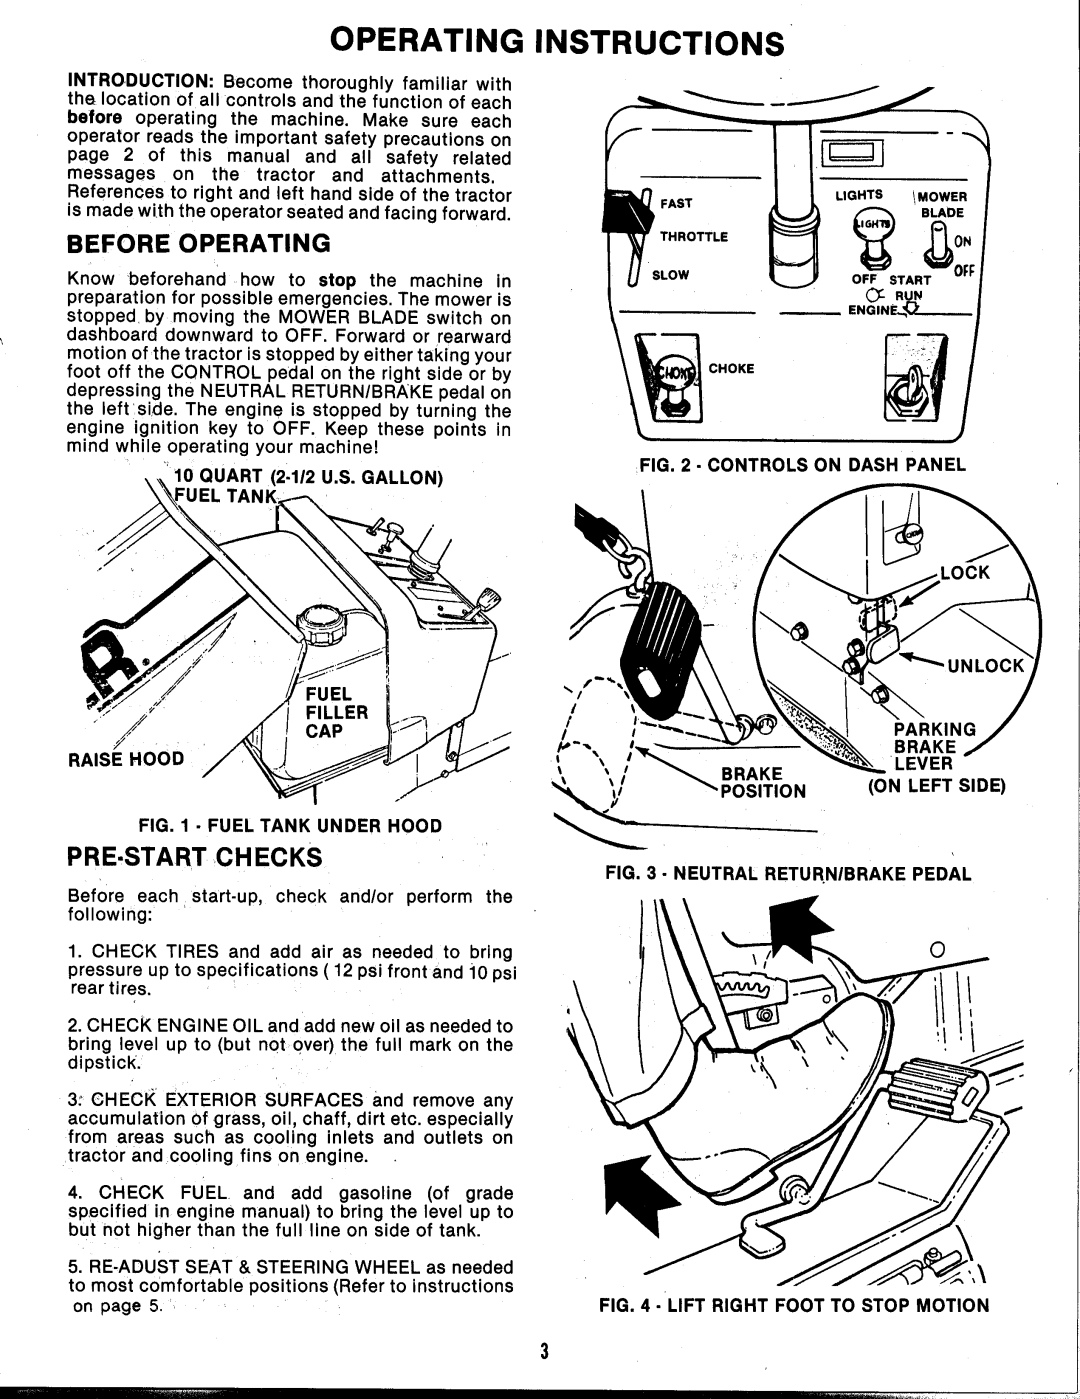 Snapper HYT18 Series manual 